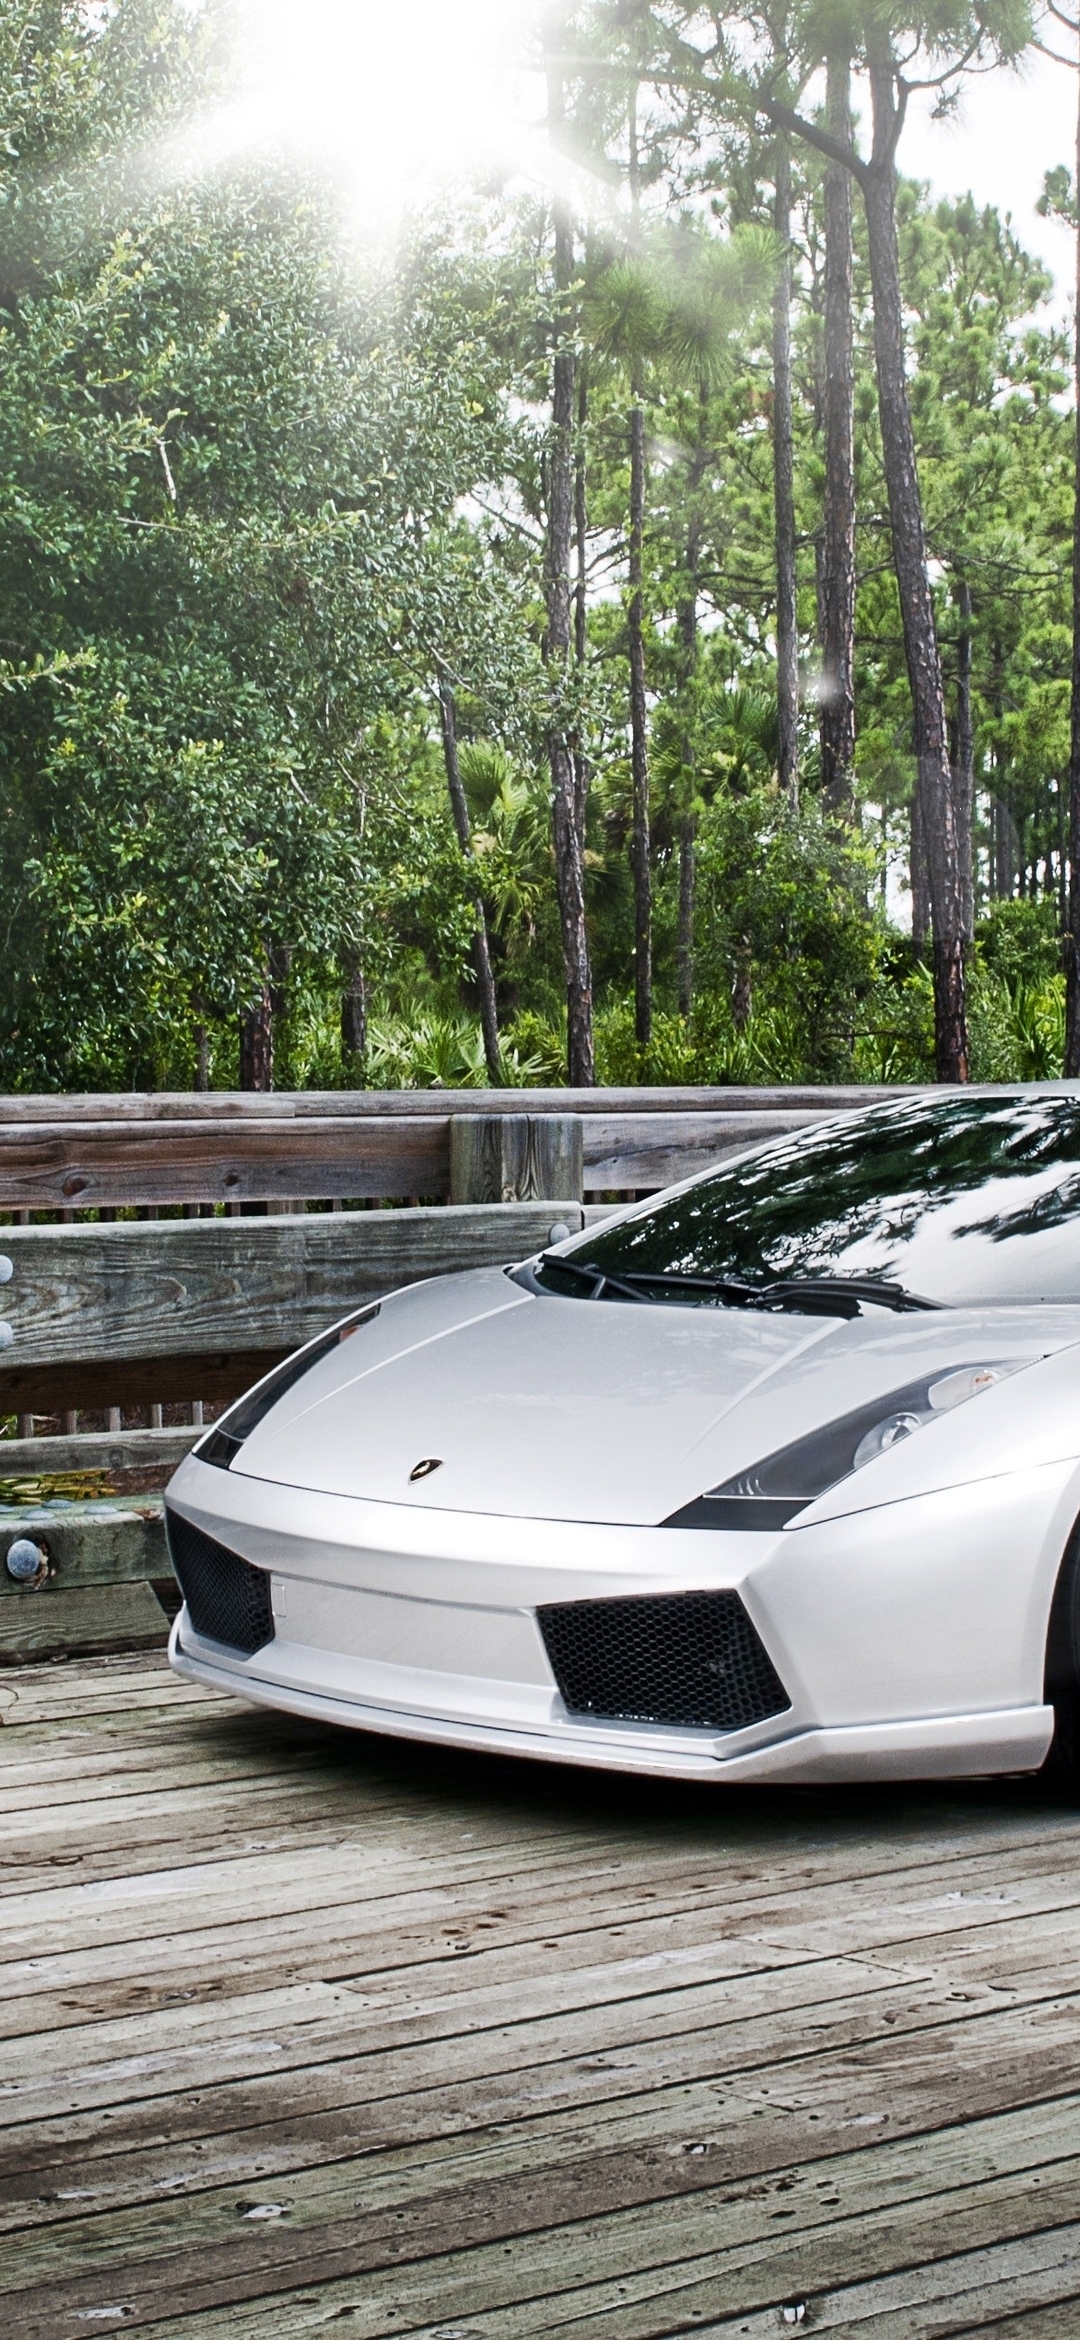 Картинка: Lamborghini, Gallardo, серебристый, суперкар, мост, доски, деревья, зелень